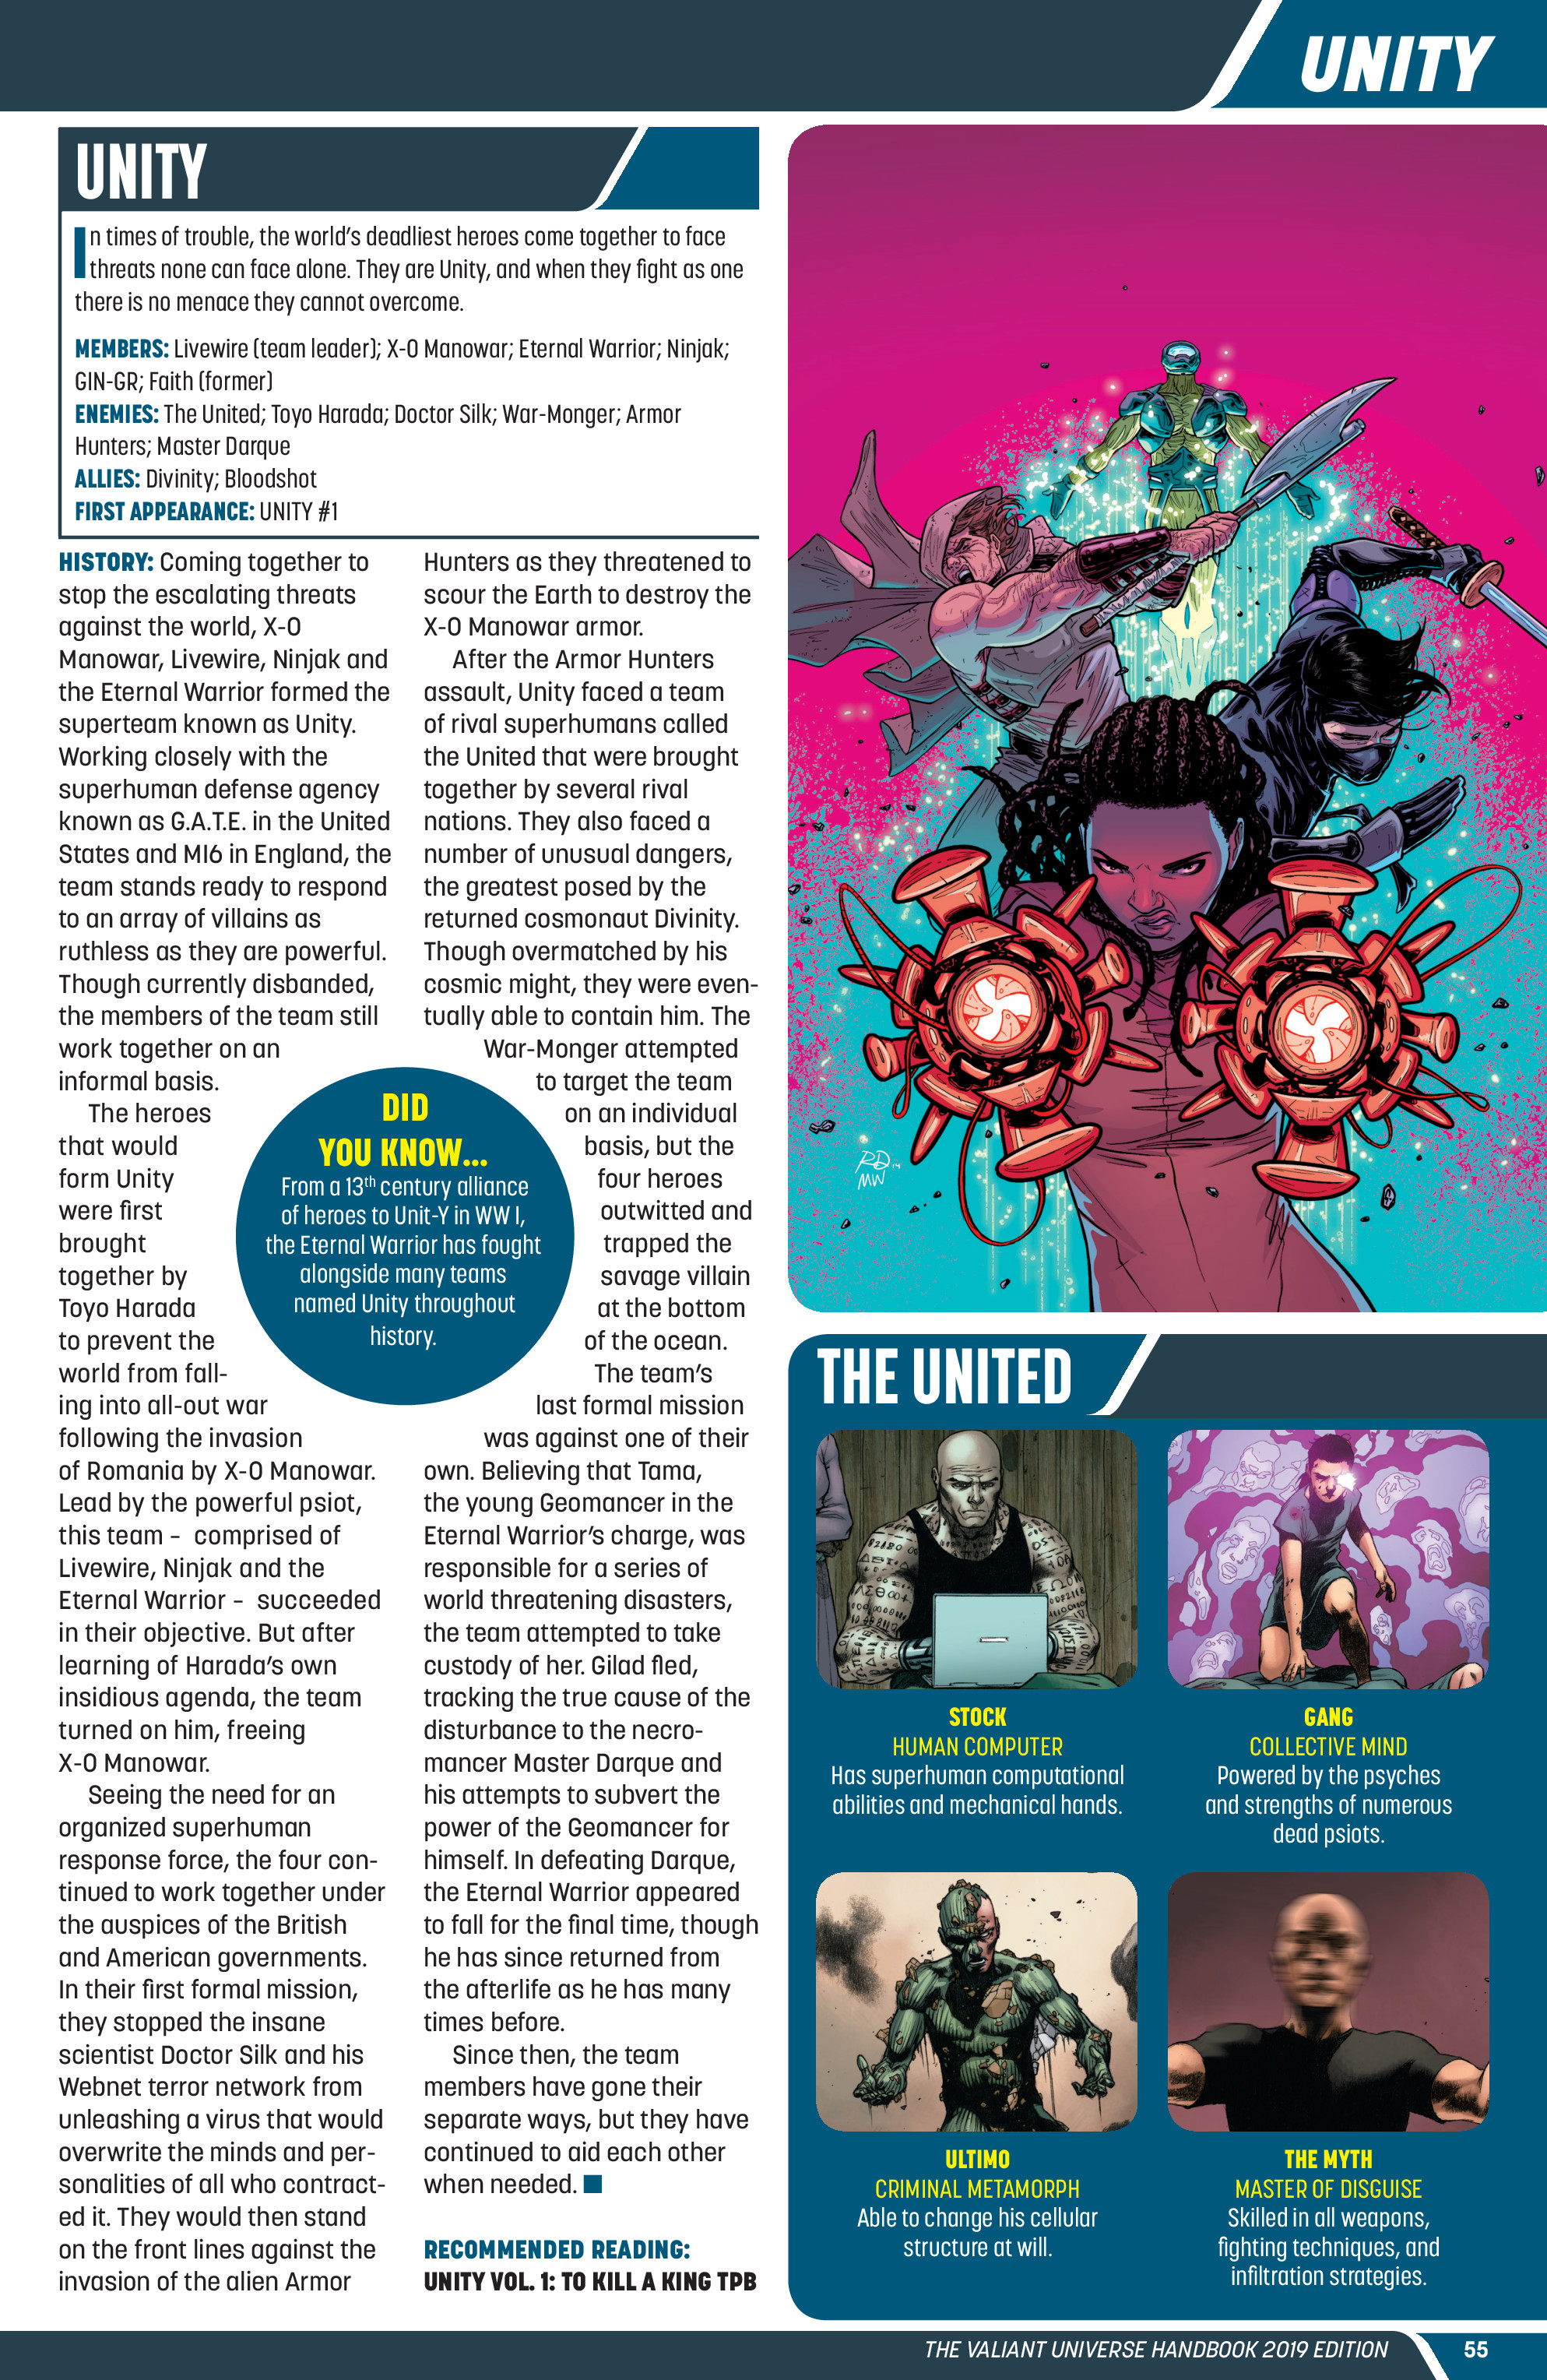 Read online Valiant Universe Handbook 2019 Edition comic -  Issue # Full - 56